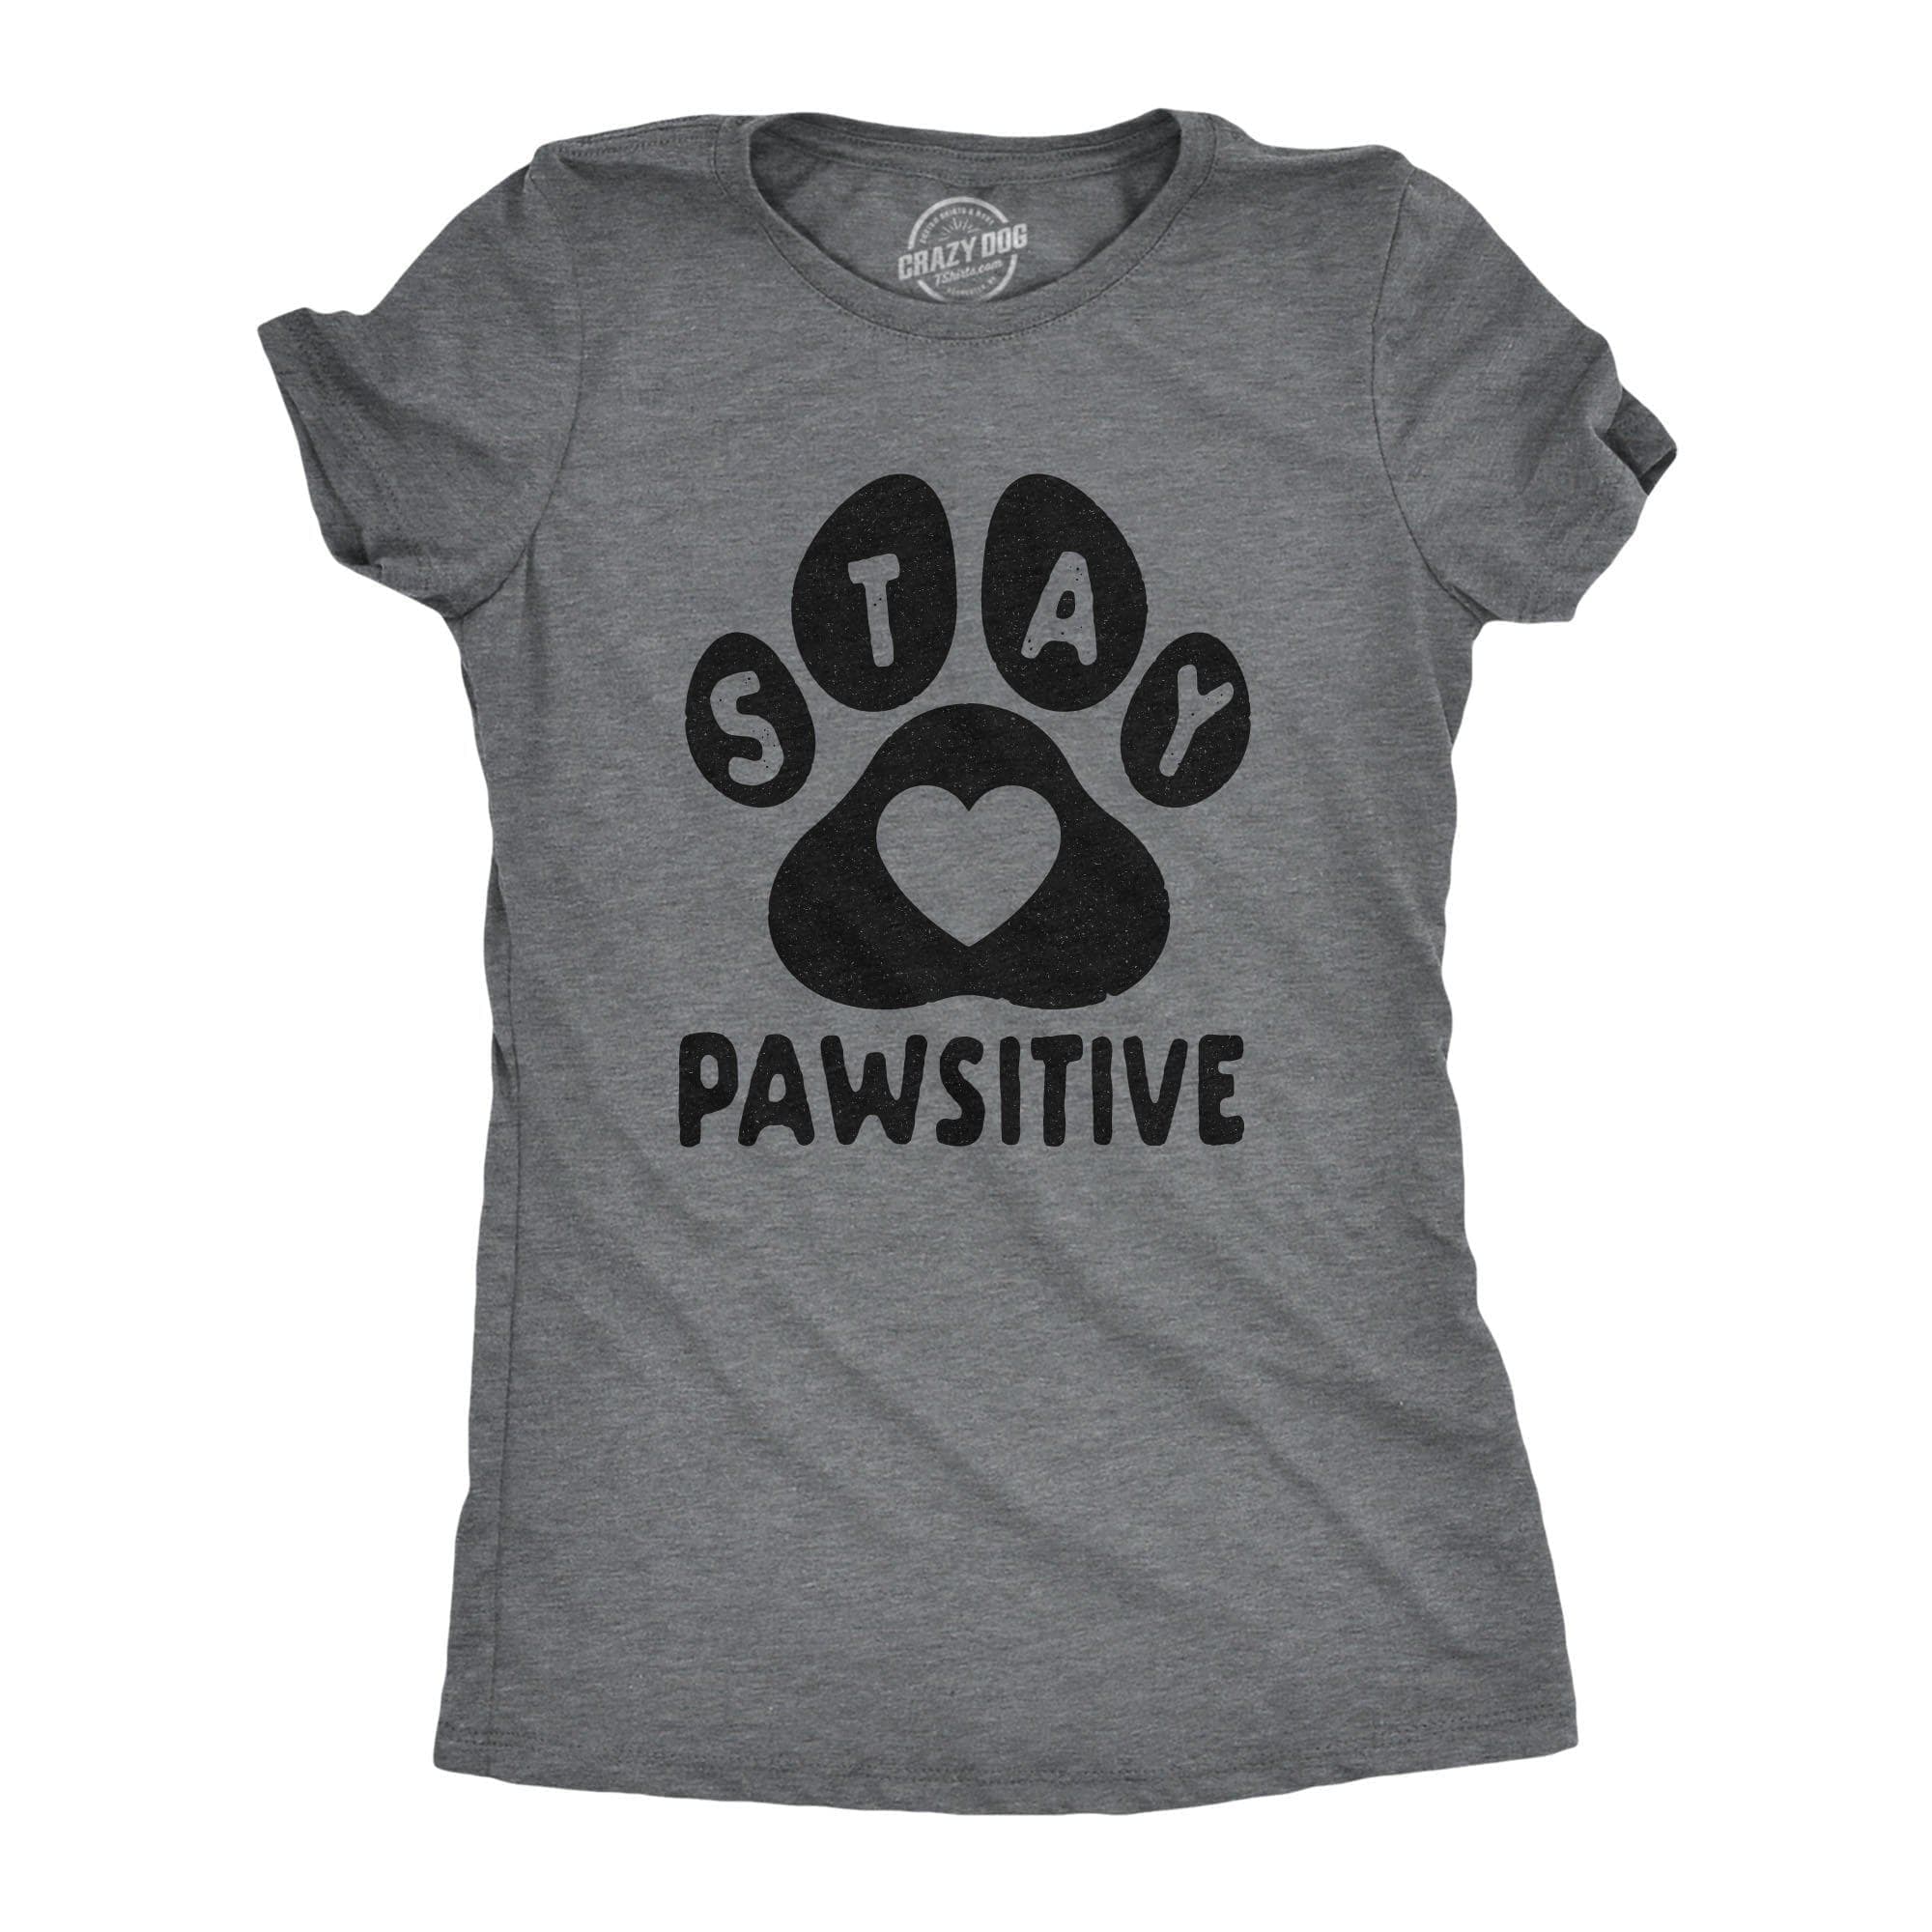 Stay Pawsitive Women's Tshirt  -  Crazy Dog T-Shirts